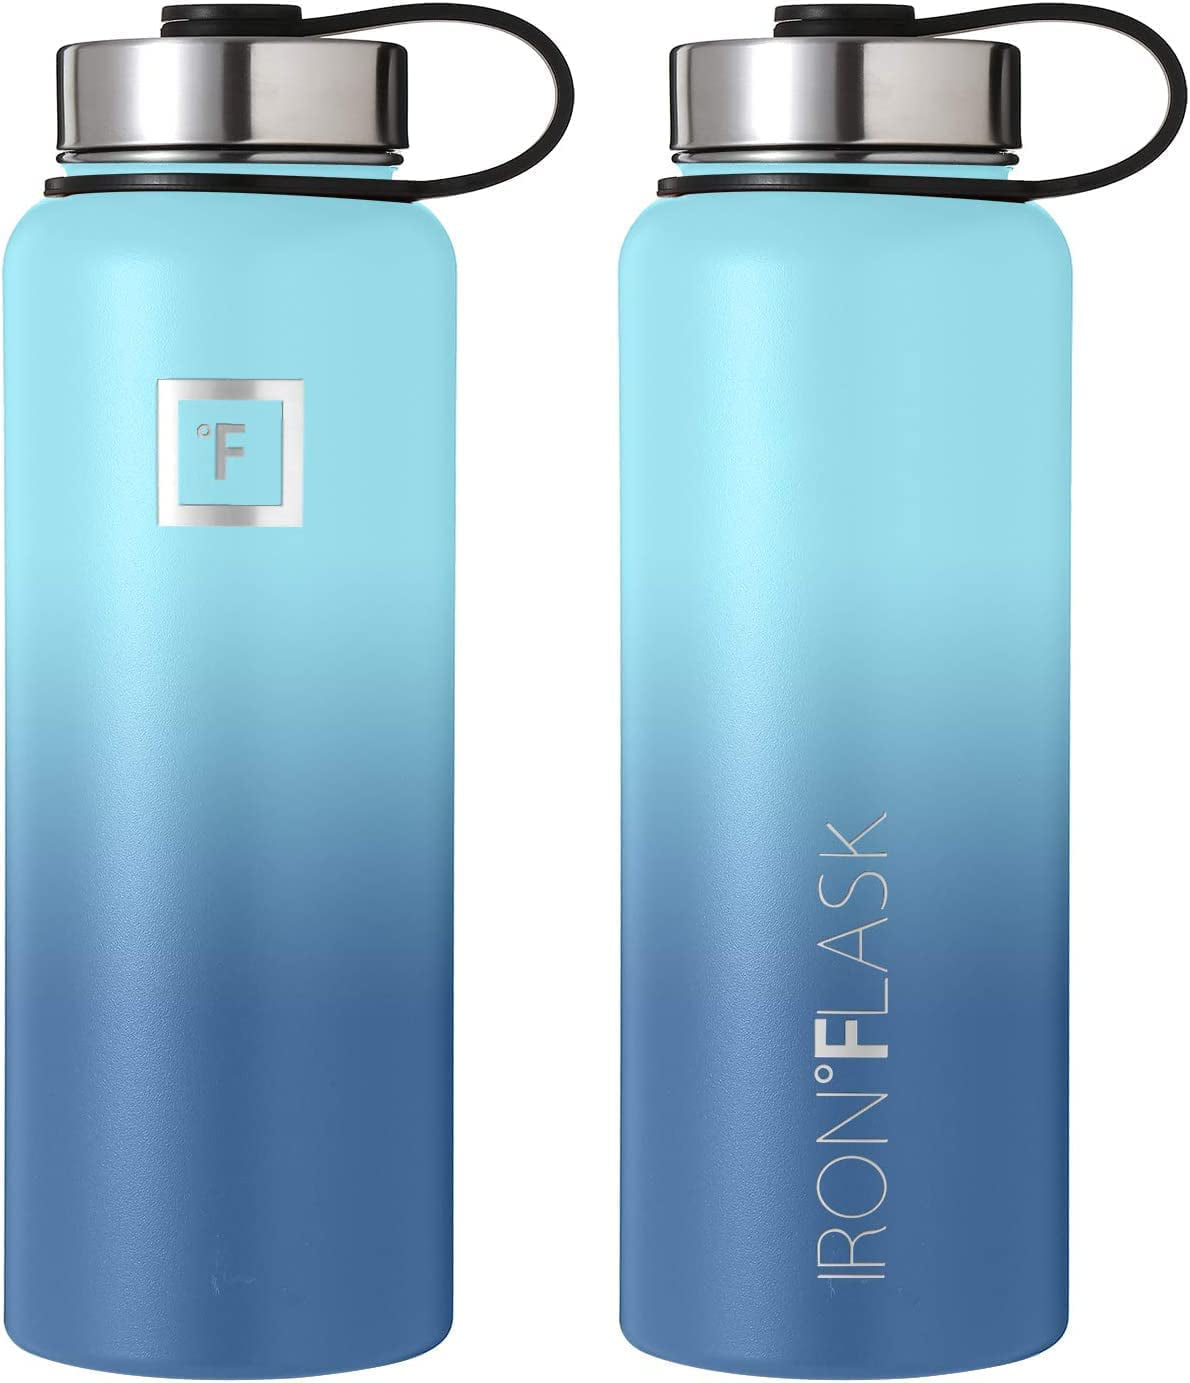 IRON FLASK SPORTS Water Bottle - 22 Oz, blue $14.76 - PicClick